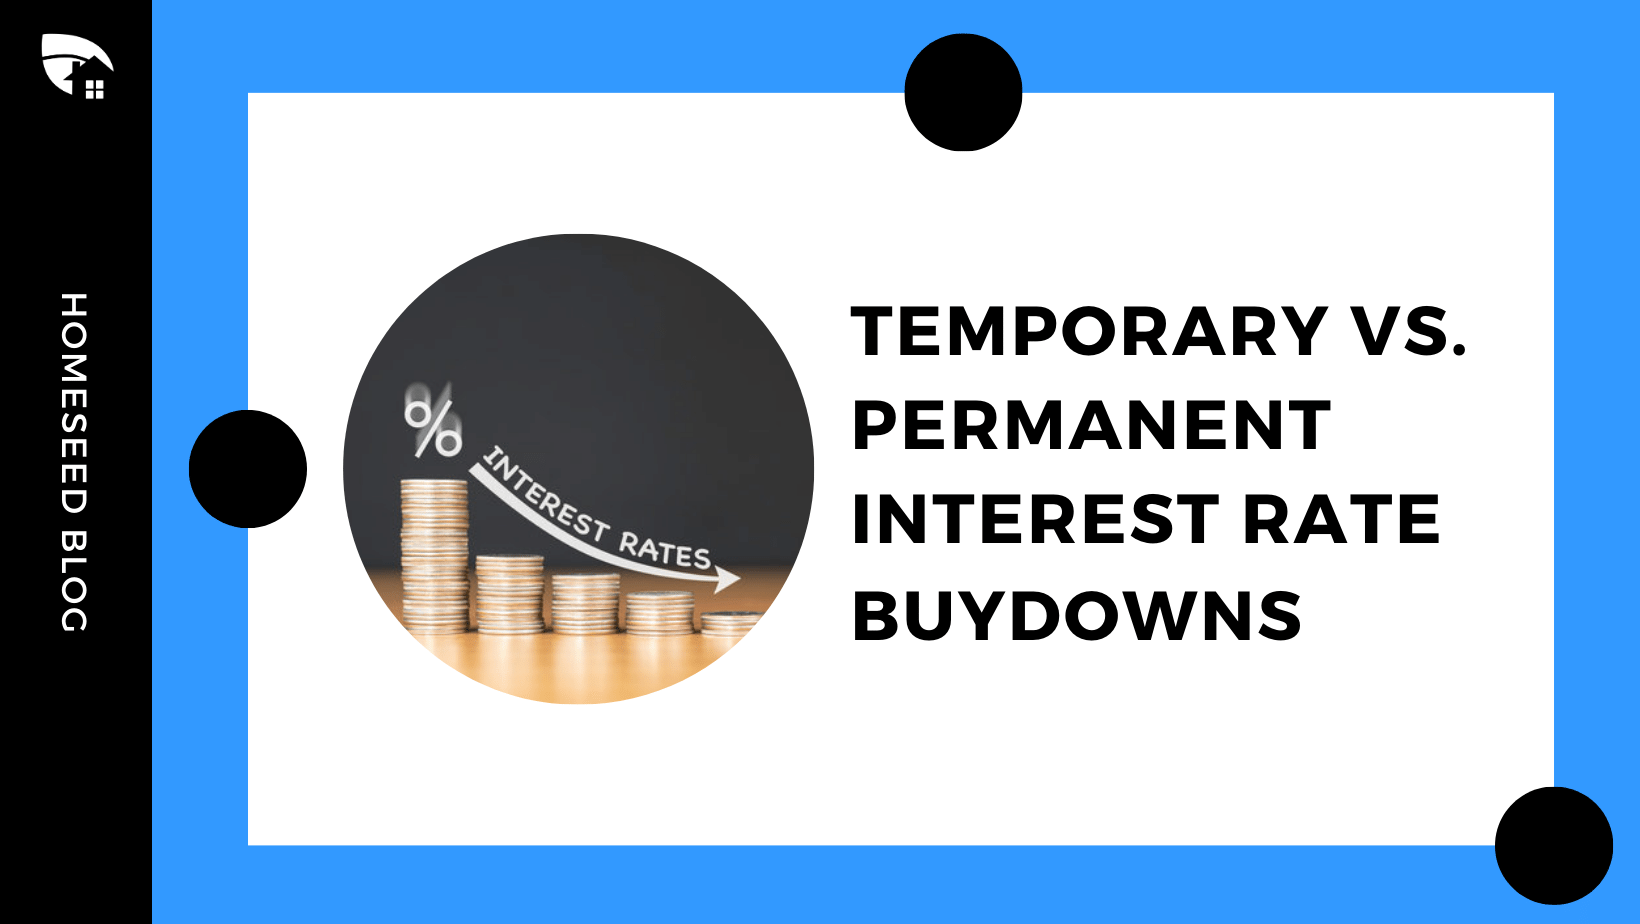 Temporary Vs. Permanent Buydowns